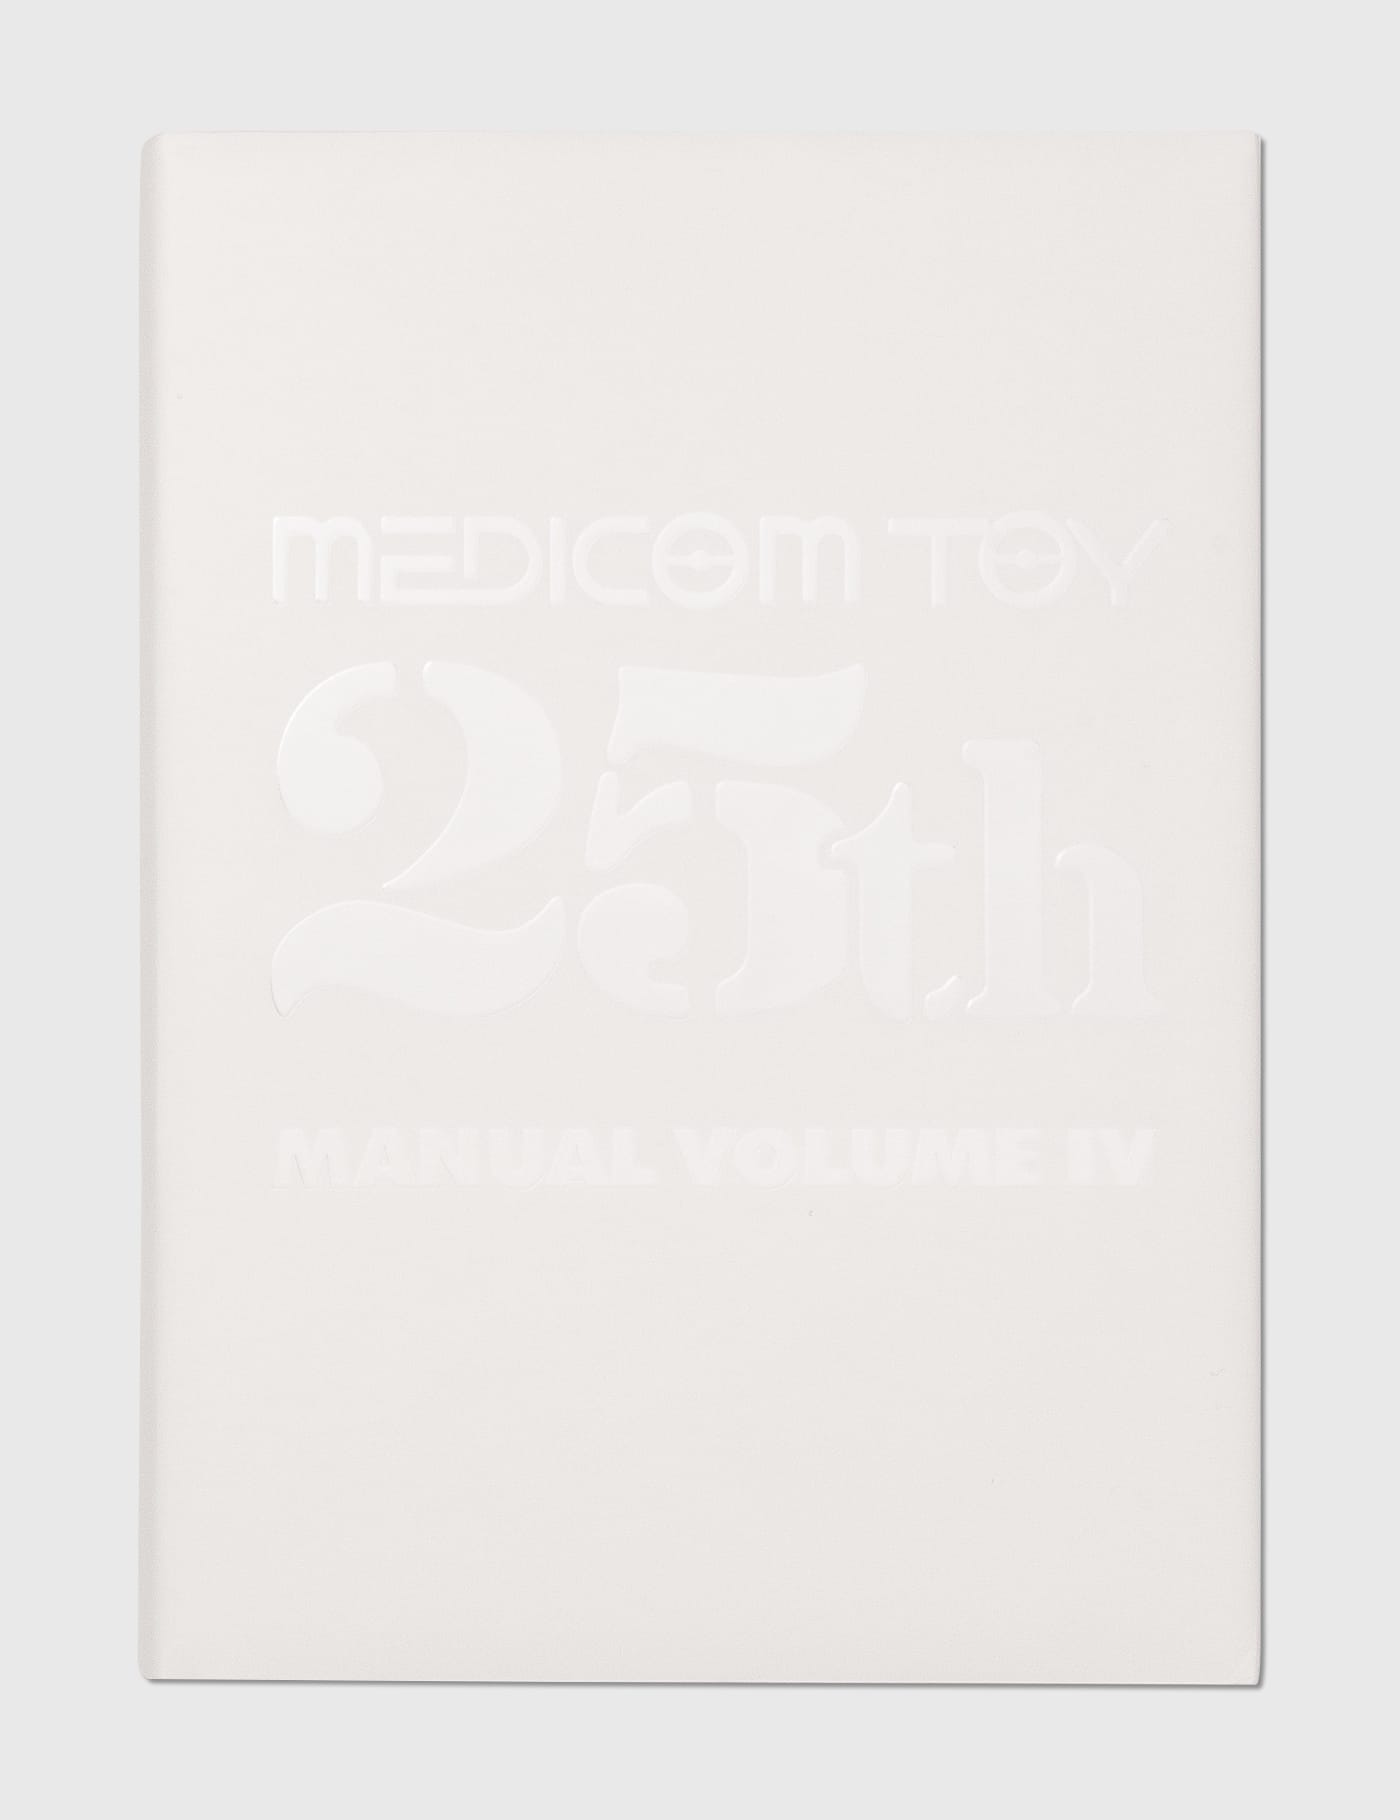 Medicom Toy - Medicom Toy 25th Anniversary Book - Manual Volume Iv 